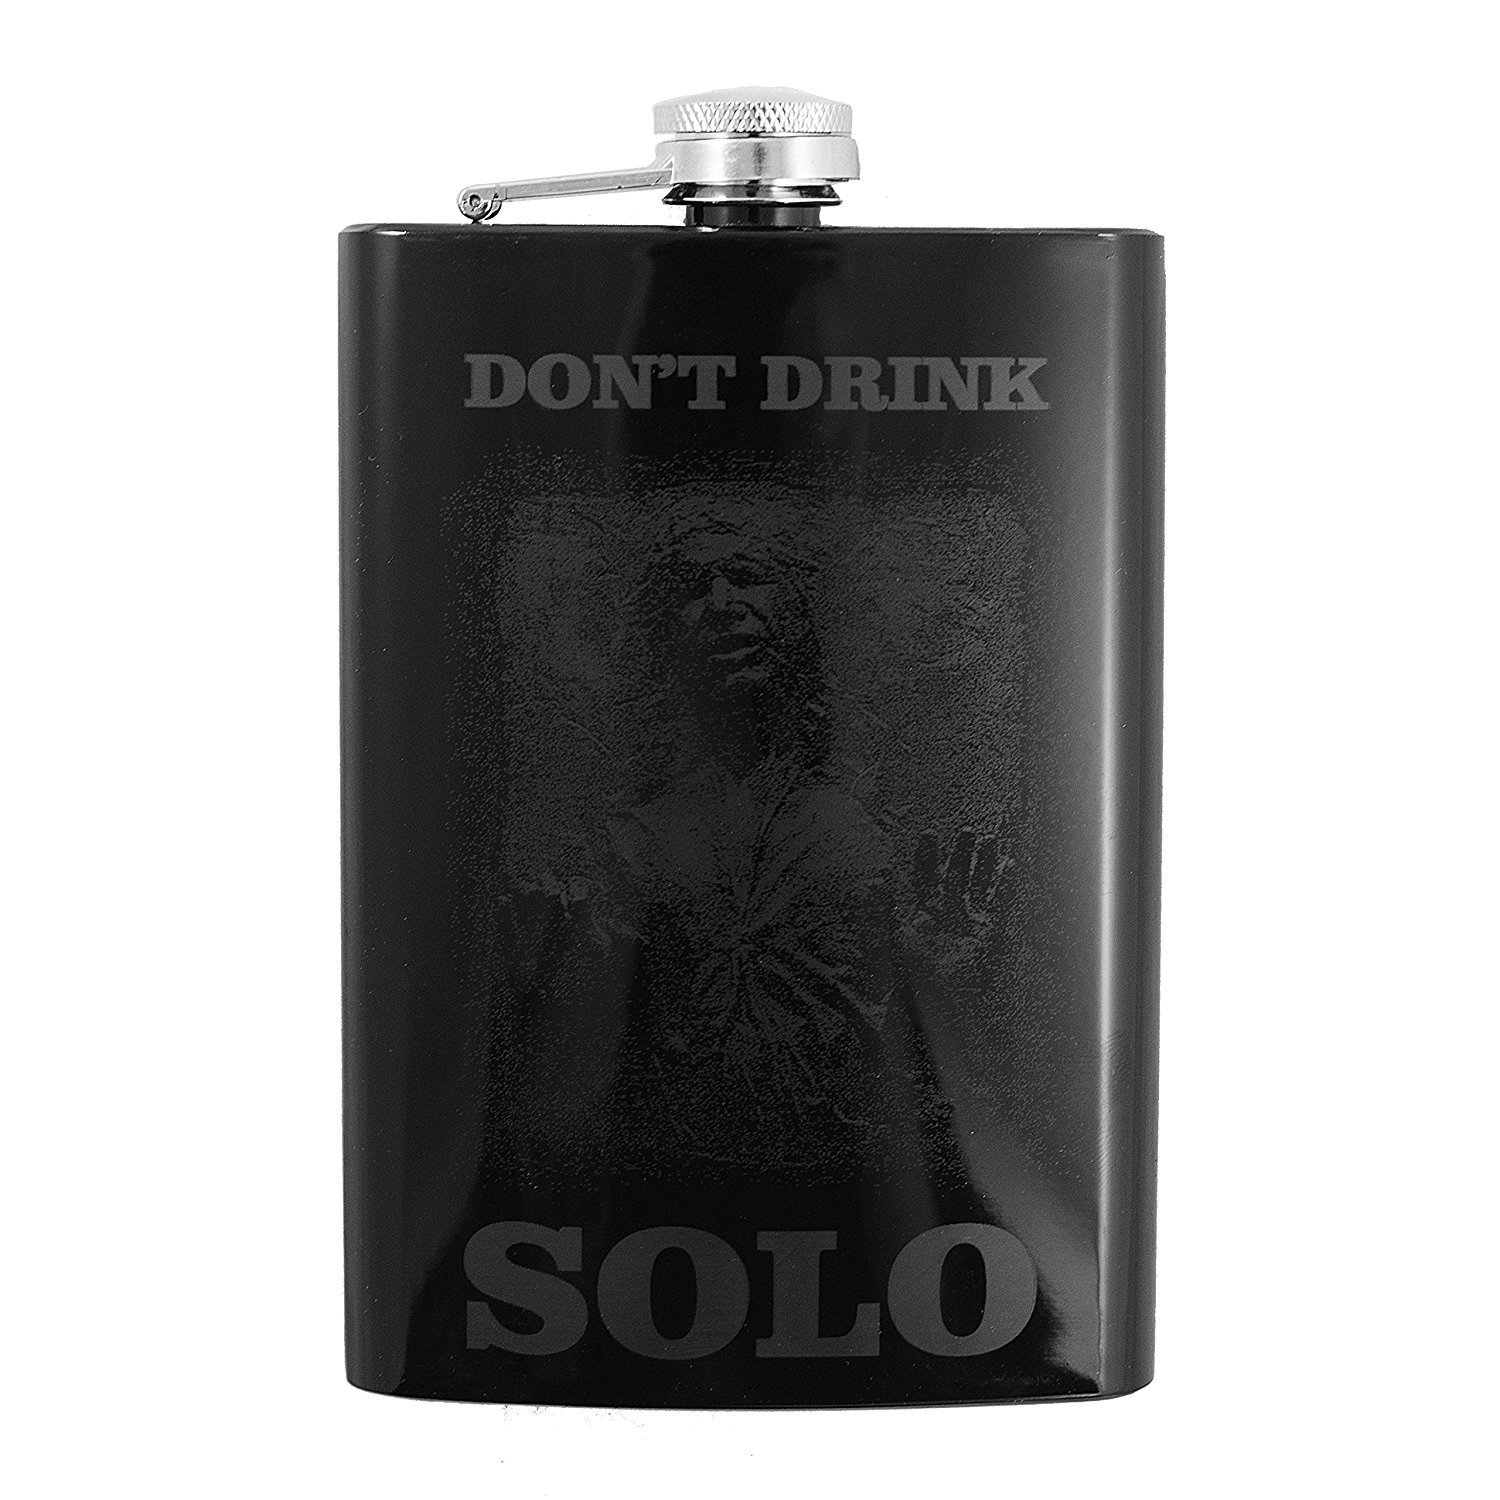 8oz Dont Drink Solo Black Flask - $21.55